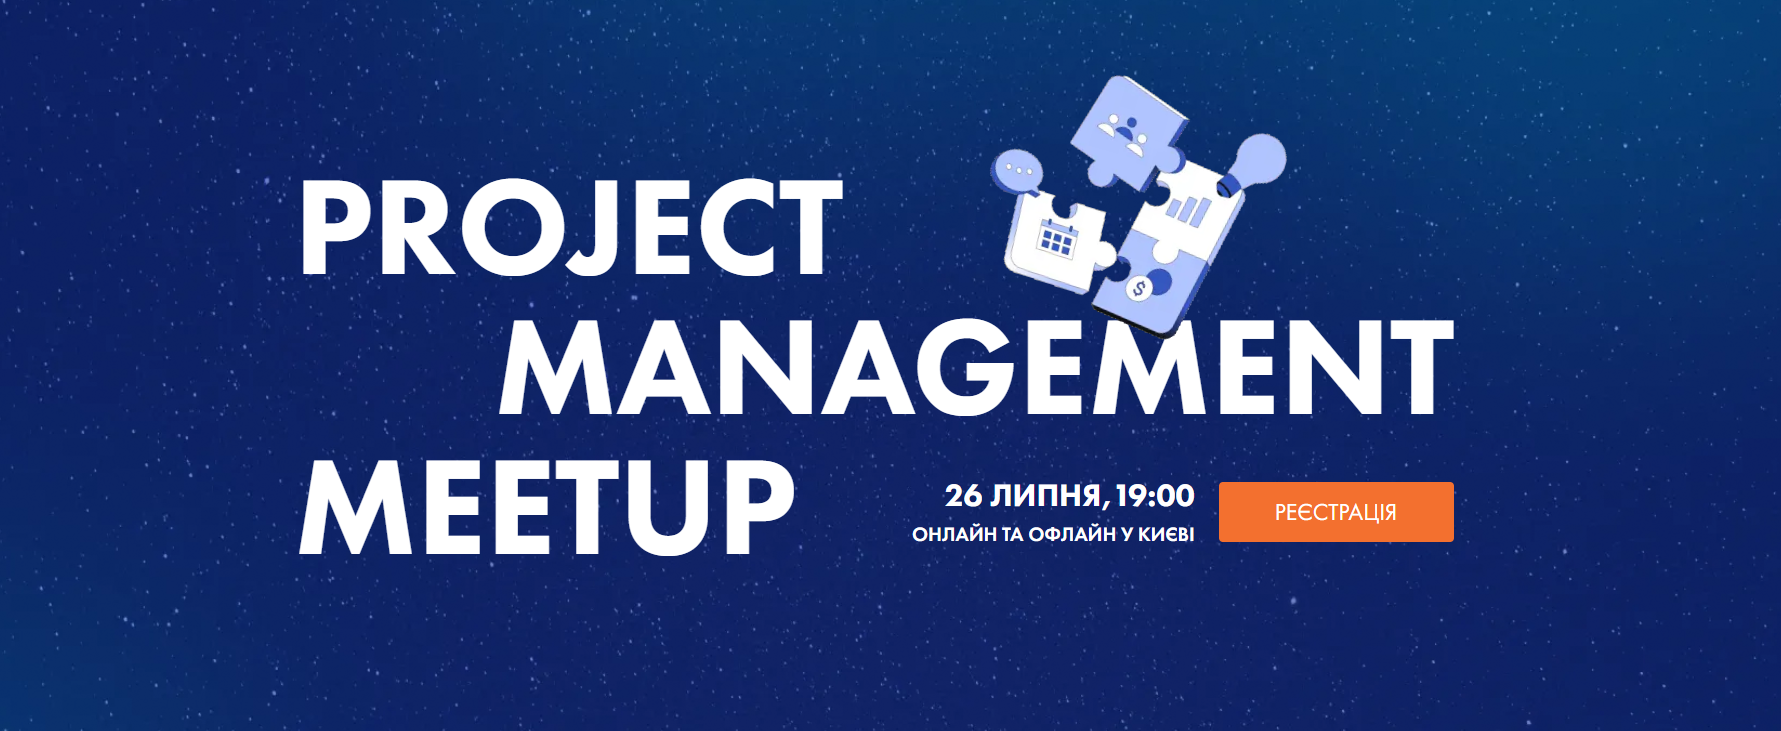 Project Management Meetup